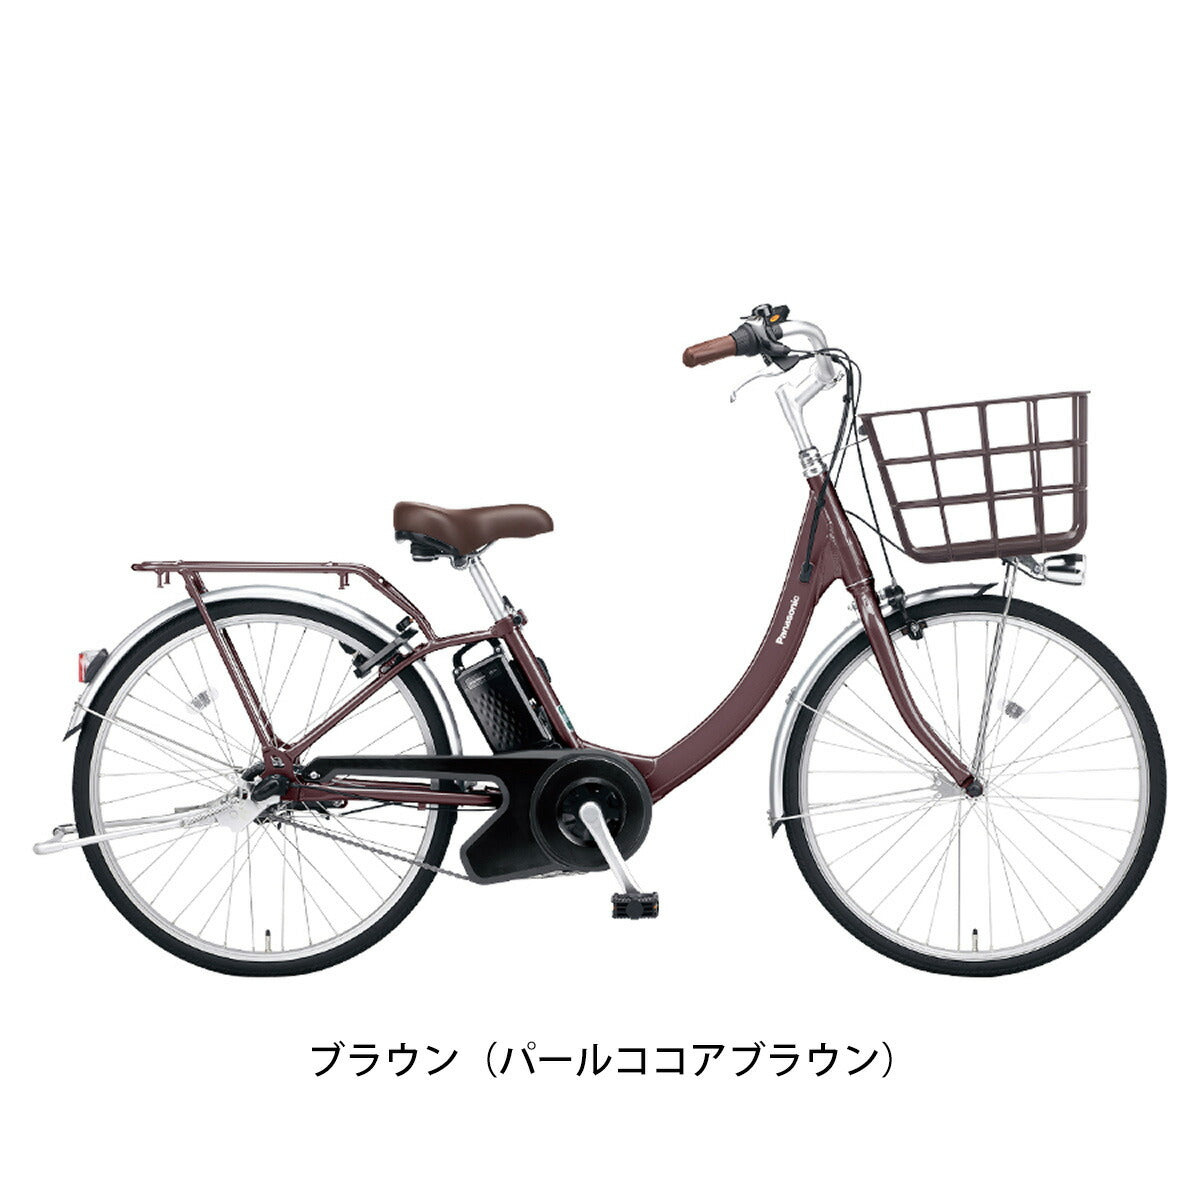 Panasonic 電動自転車 24インチ - 自転車